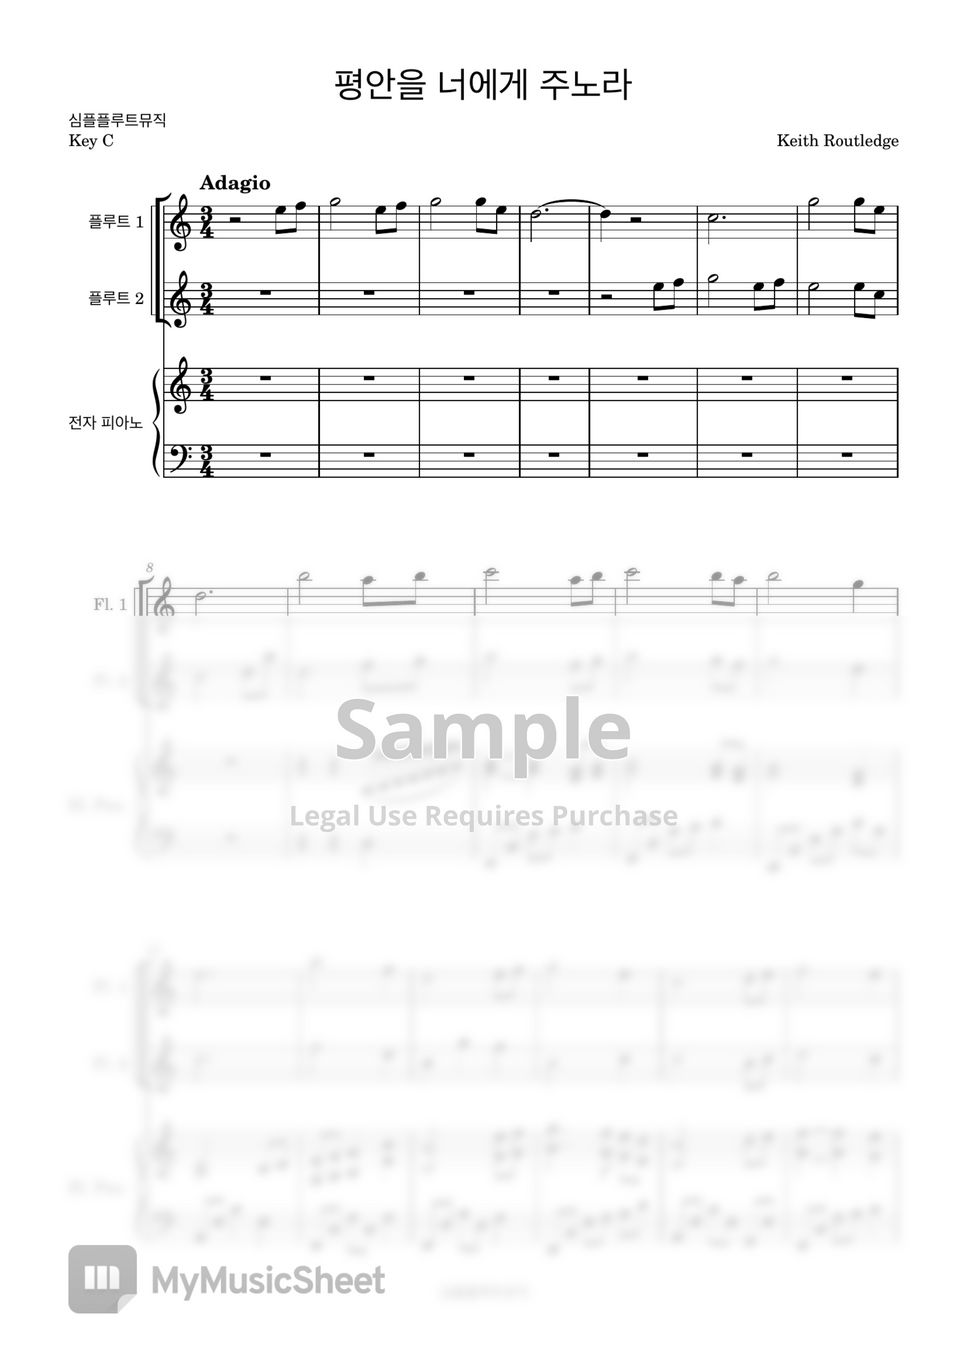 Keith routledge - 평안을 너에게 주노라 (Two Flutes/Piano/MR) by 심플플루트뮤직